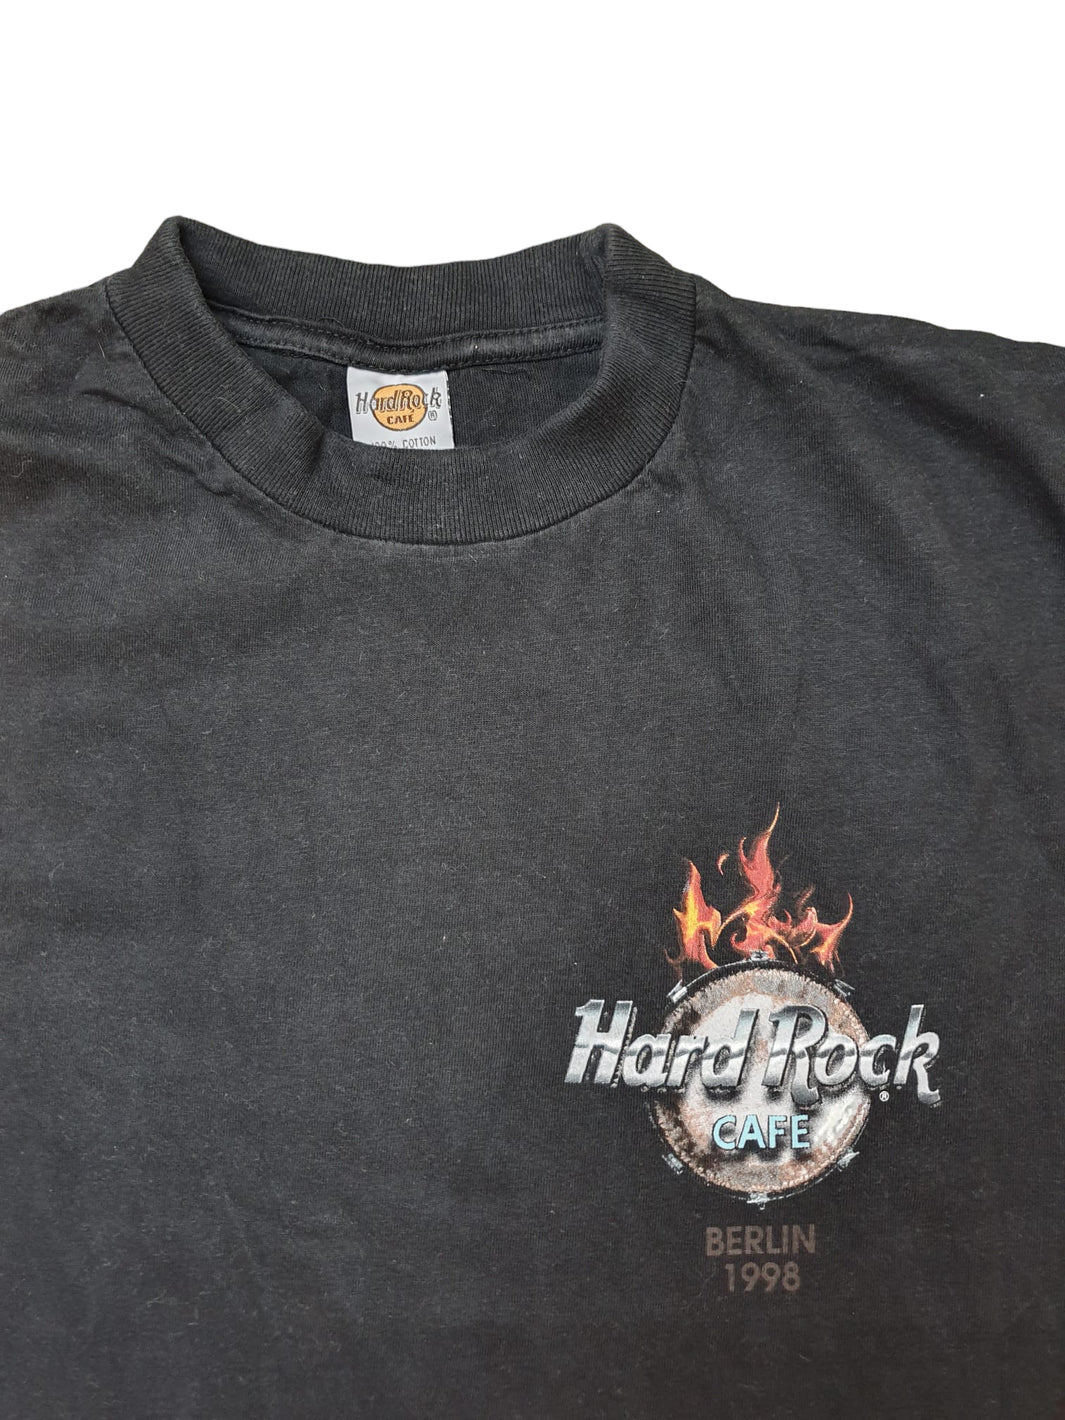 Hard Rock Berlin Shirt 90s